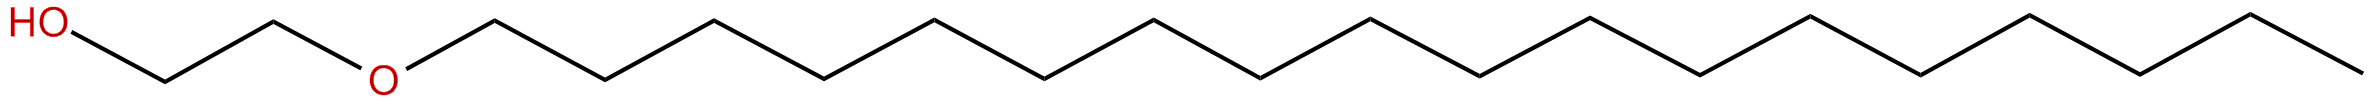 Image of 2-(octadecyloxy)ethanol